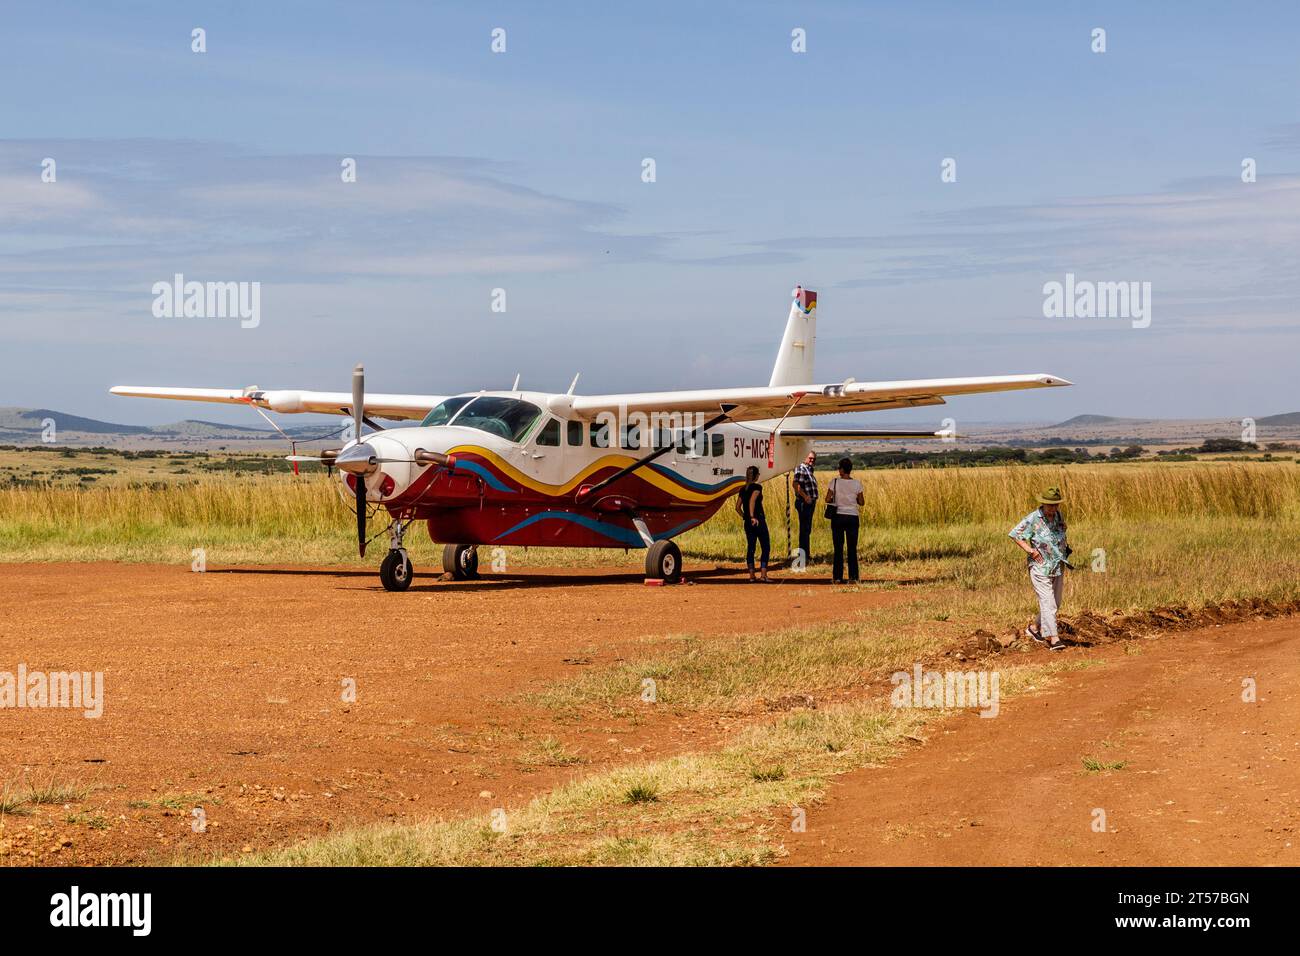 MASAI MARA, KENYA - FEBRUARY 19, 2020: Airplane at the Keekorok airstrip in Masai Mara National Reserve, Kenya Stock Photo